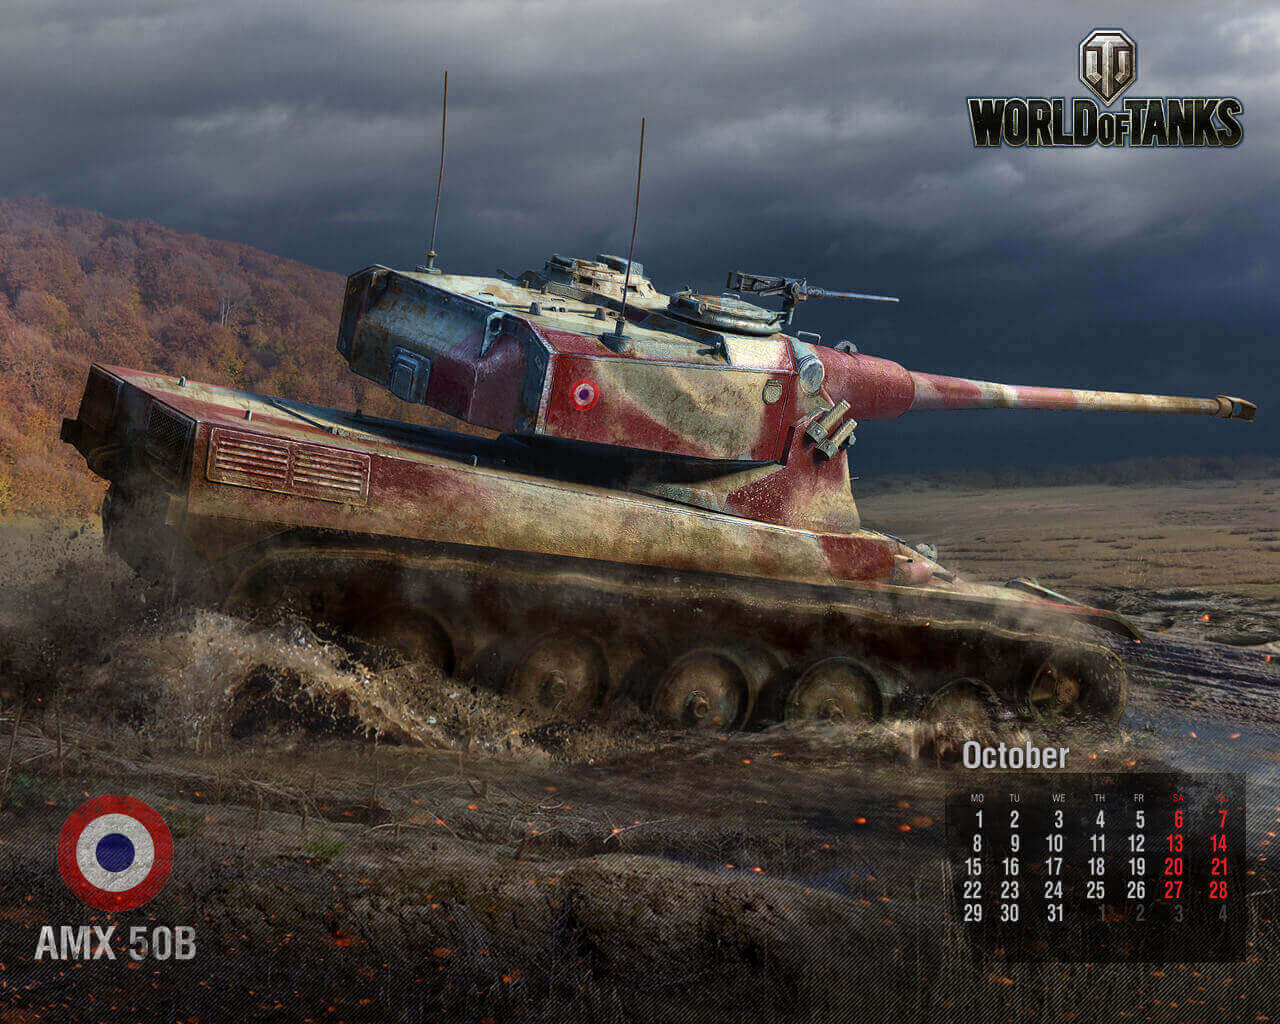 October Calendar: AMX 50B